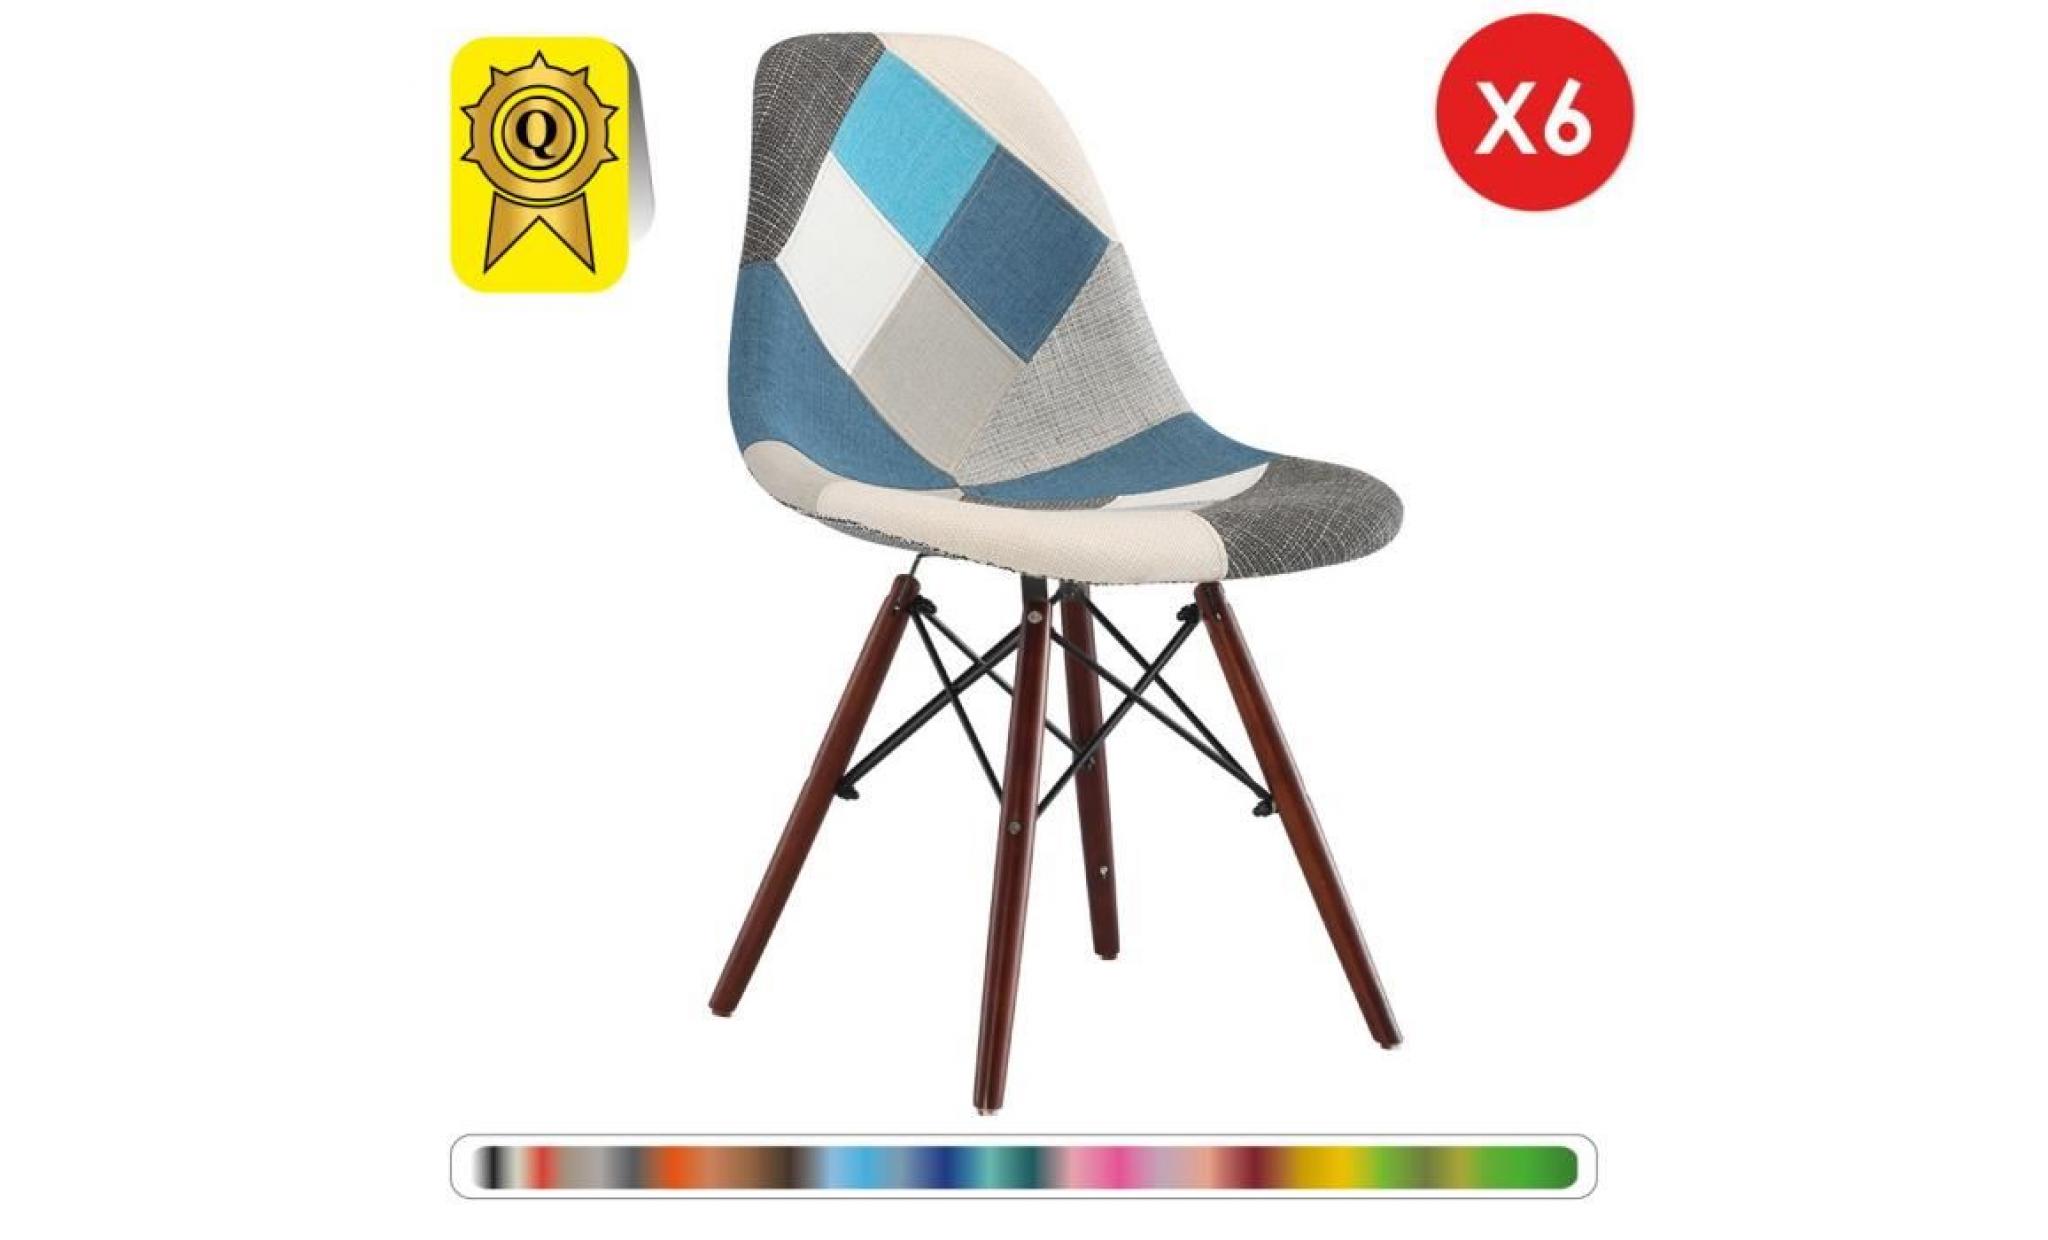 6 x chaise design scandinave   patchwork bleu pieds  bois vernis noyer  decopresto dp dswd pcb 6